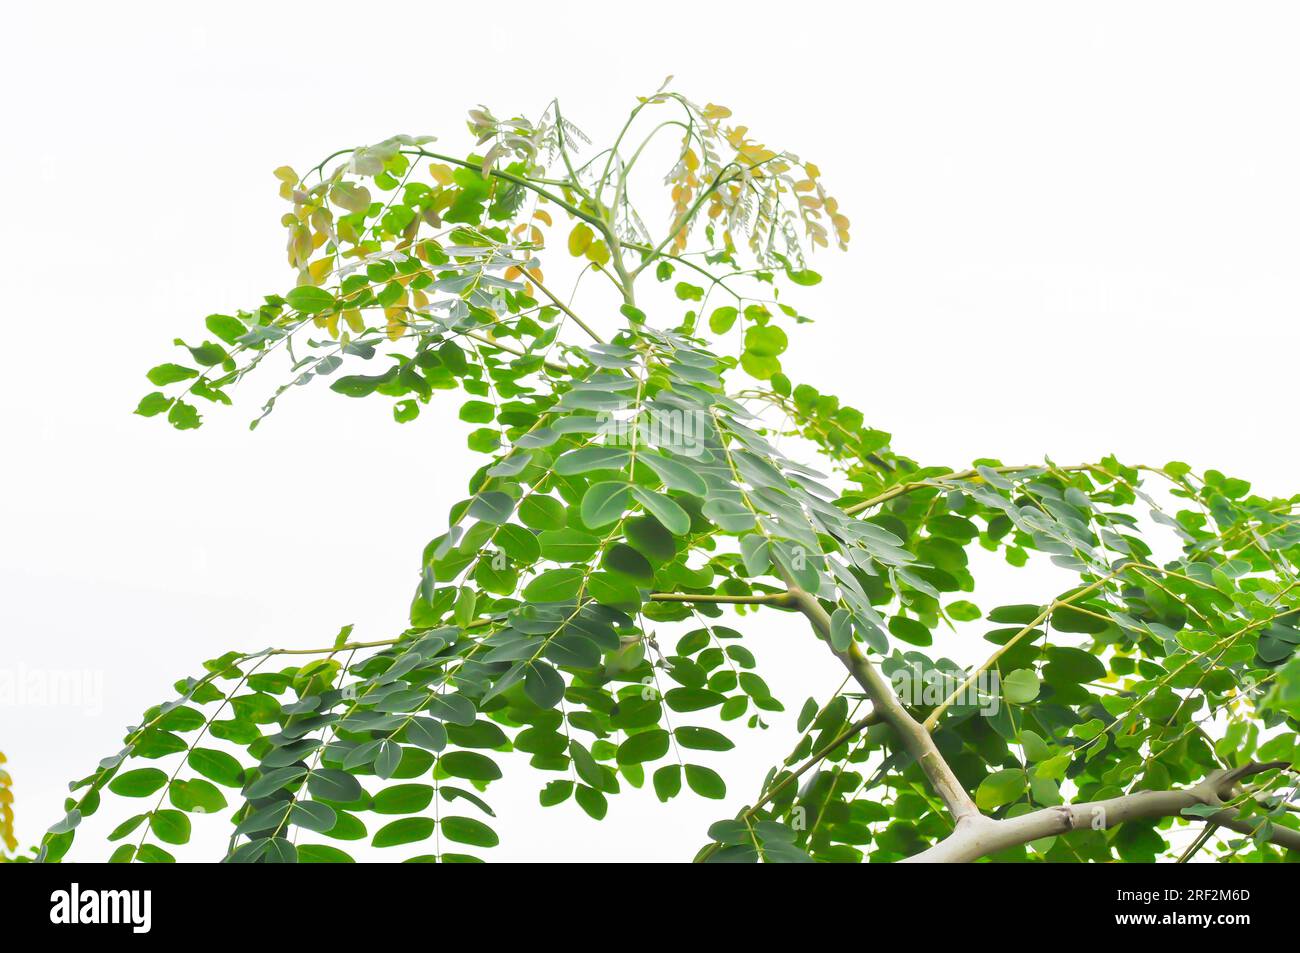 Adenanthera pavonina L or Leguminosae Mimosoideae or Red sandalwood tree or Coralwood tree or Sandalwood tree or Bead tree and sky background Stock Photo